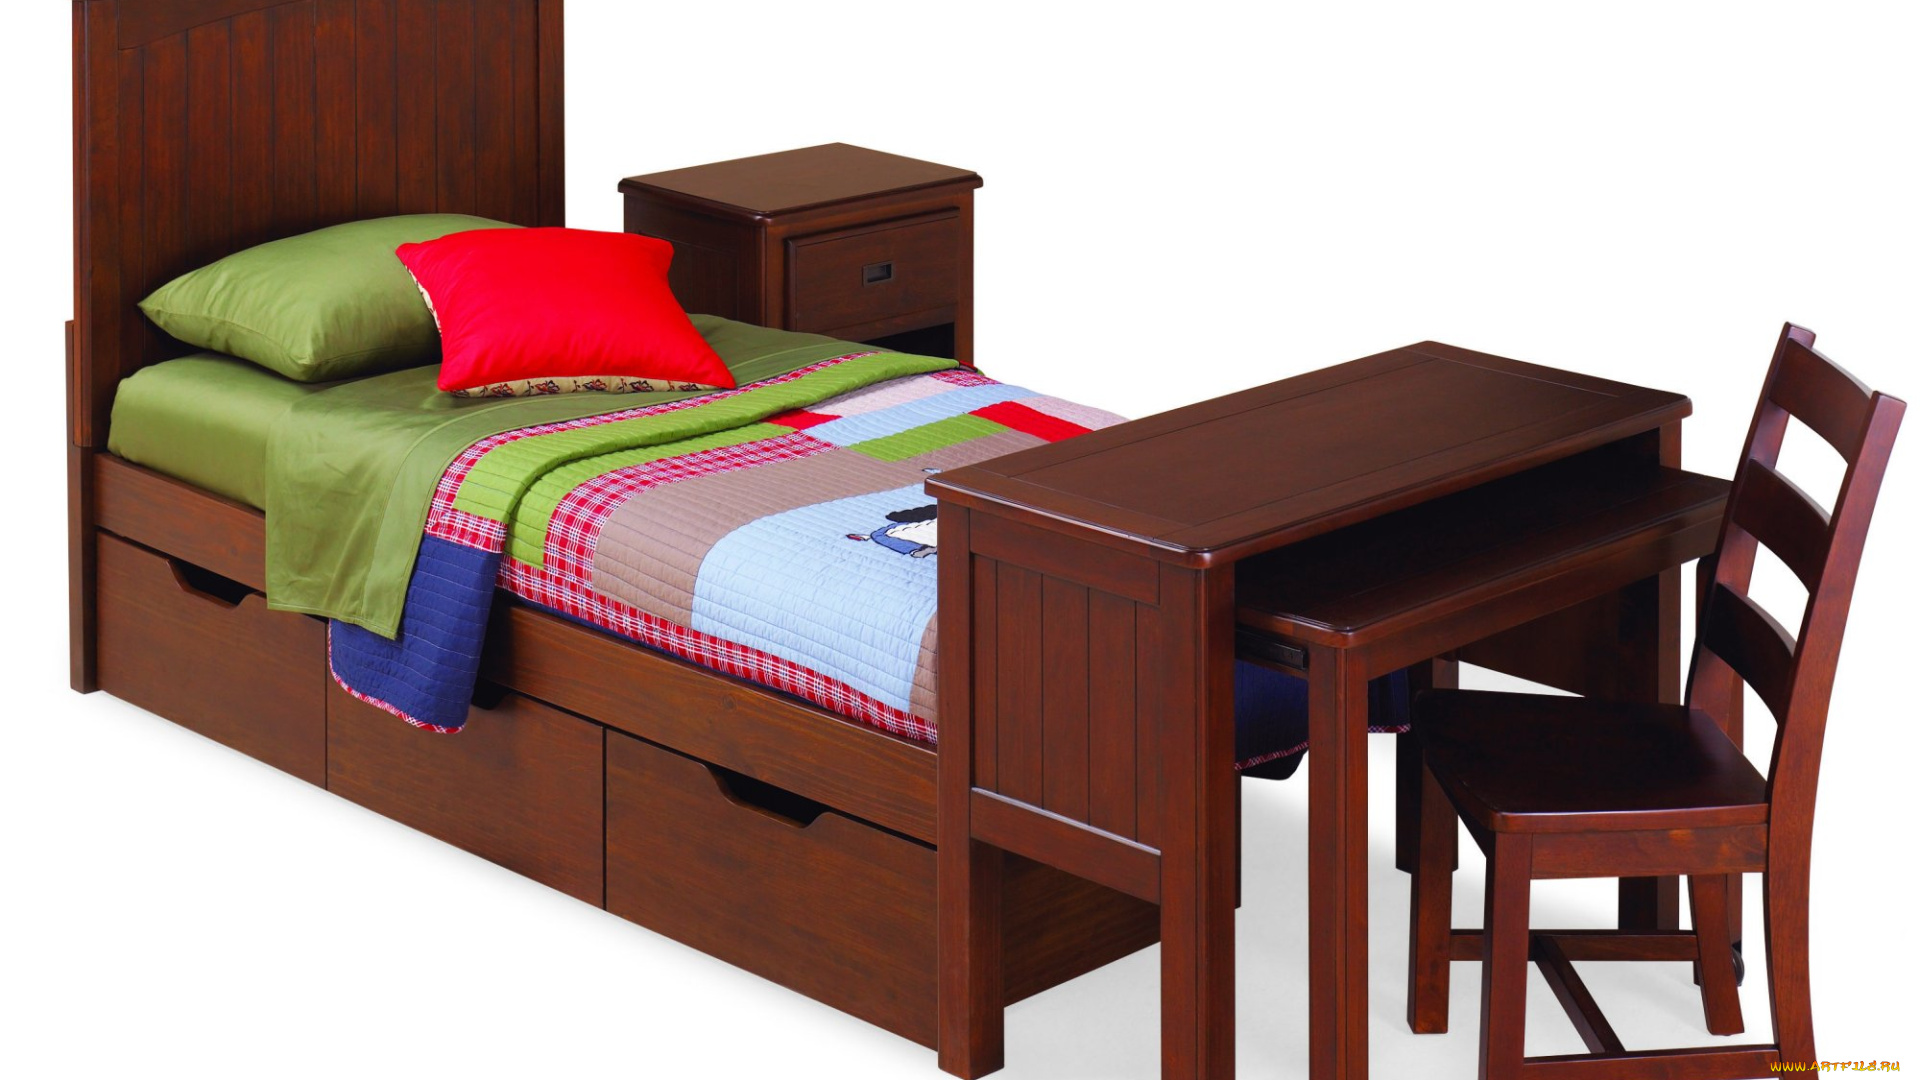 интерьер, мебель, кровать, подушки, тумбочка